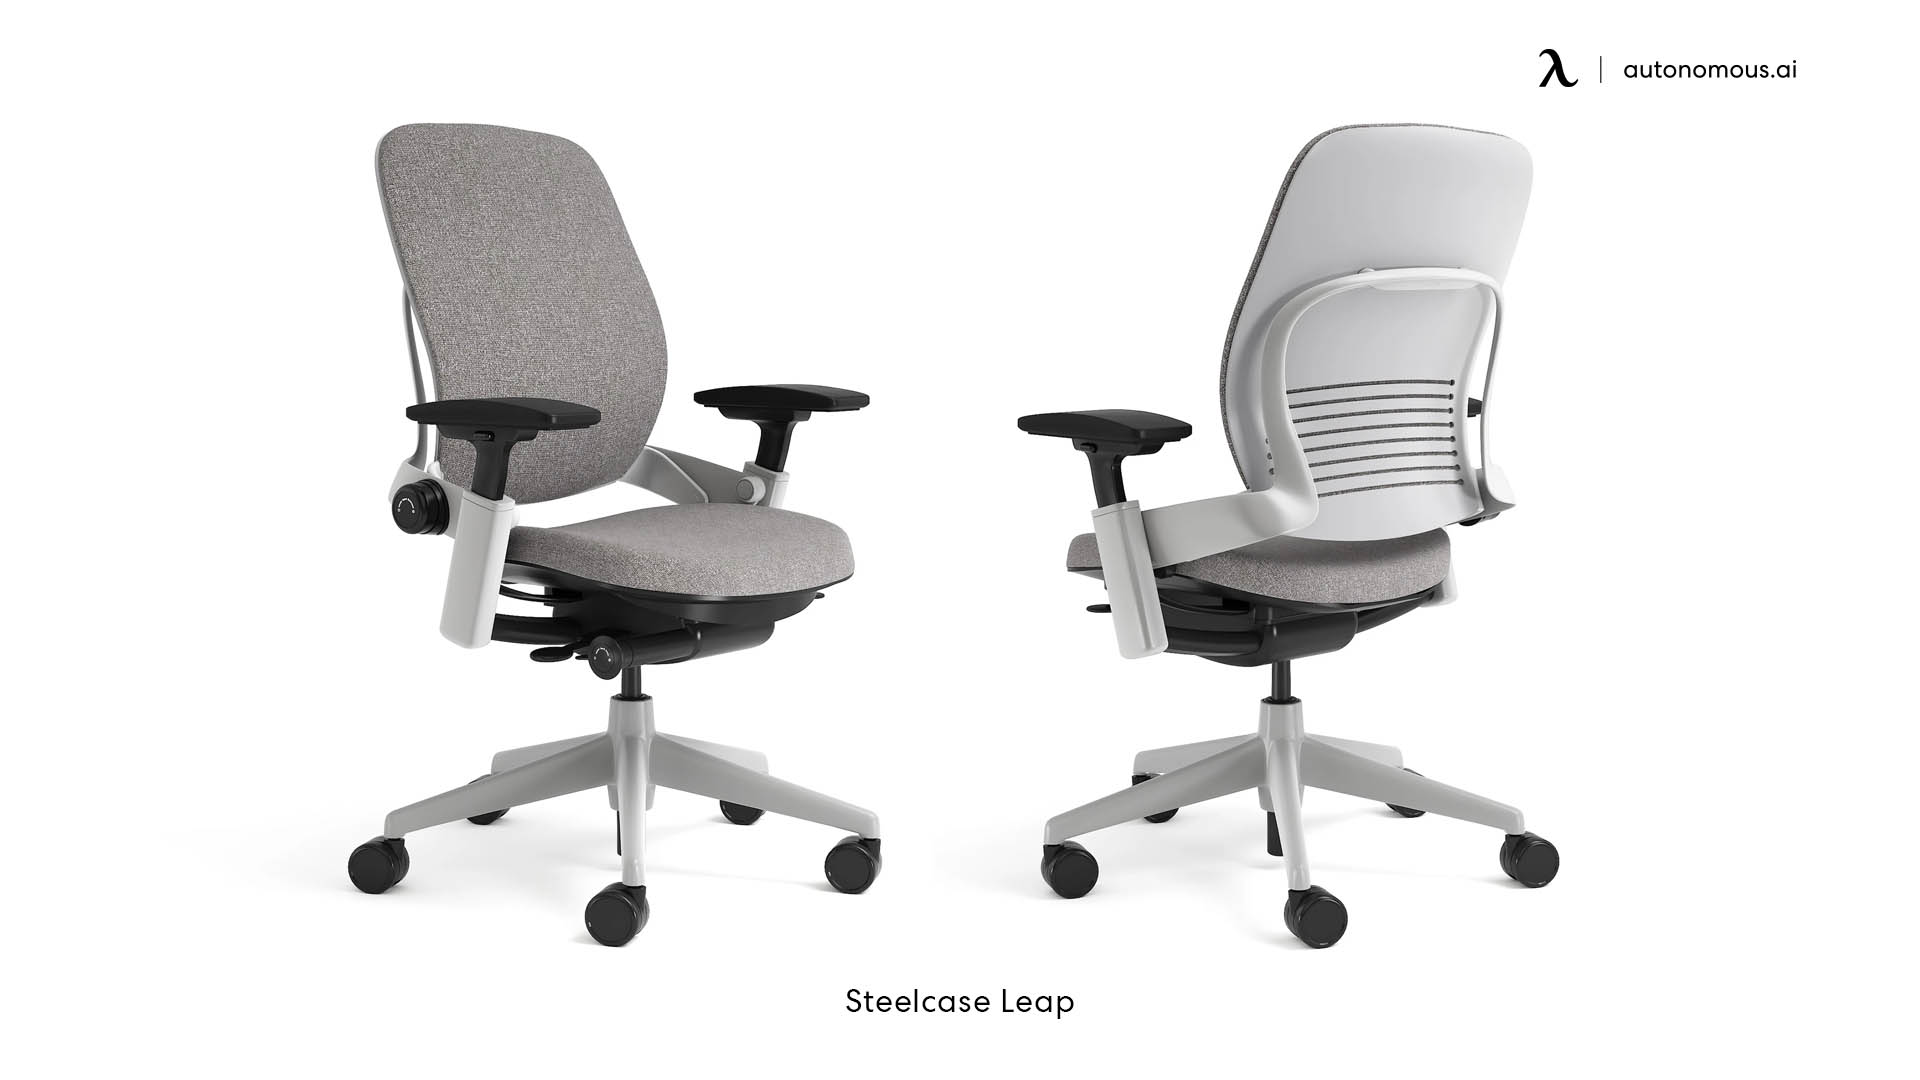 Steelcase Leap ergonomic stylish desk chair